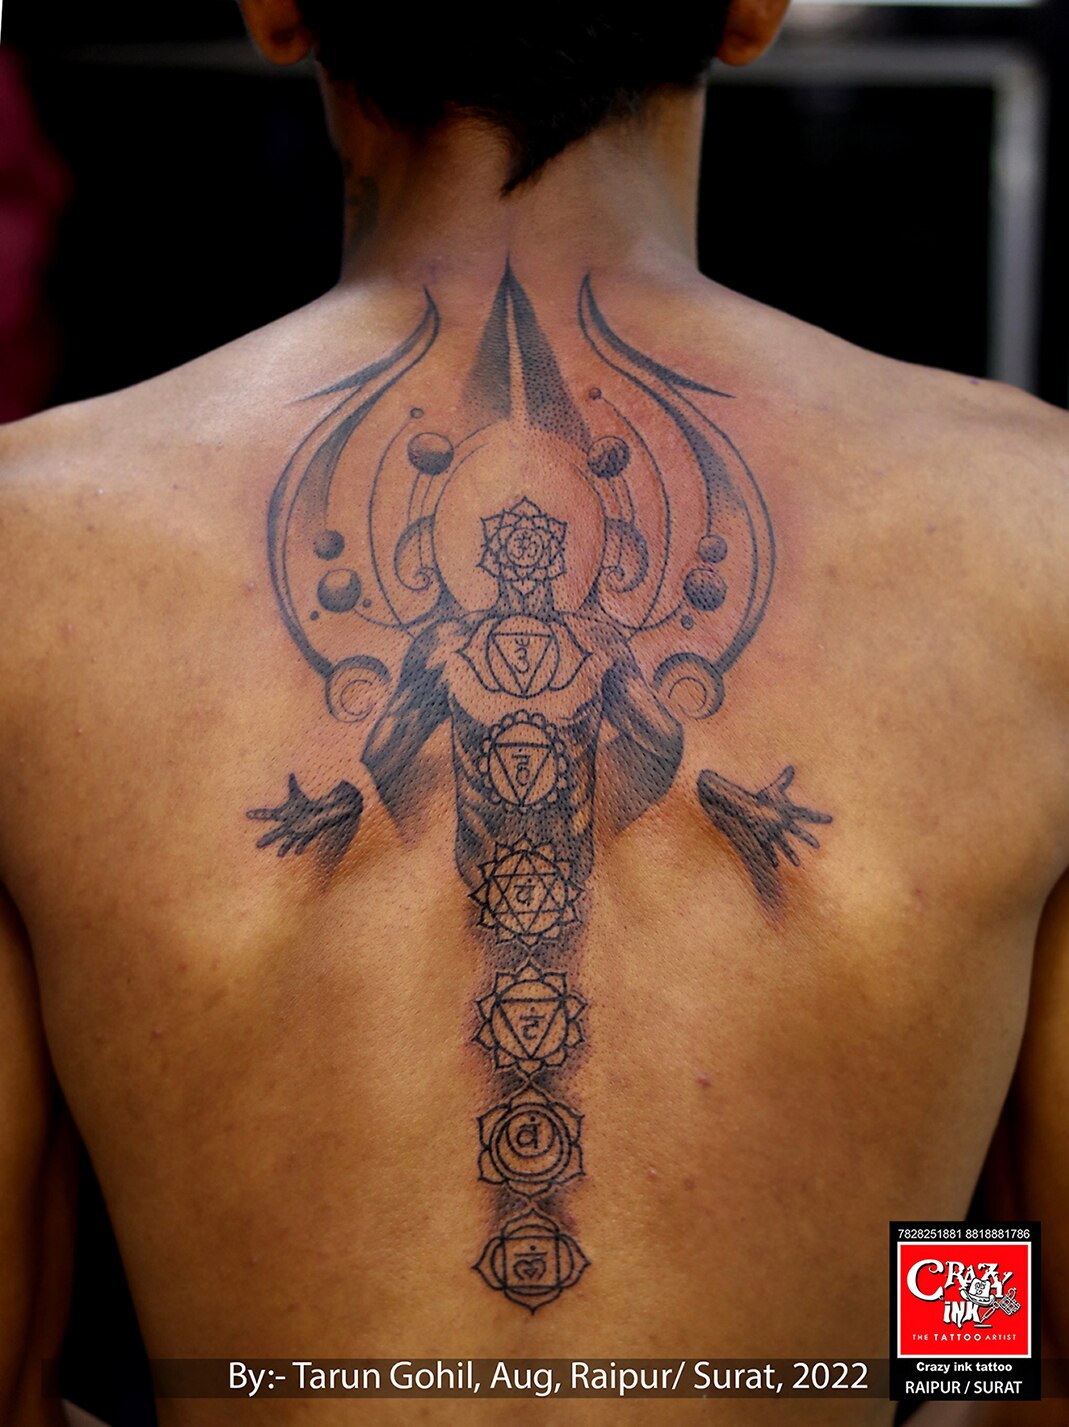 Chakras  DeserveADrPepperDuet OscarsAtHome WomenOwnedBusin   Tattoo Artist  446K Views  TikTok